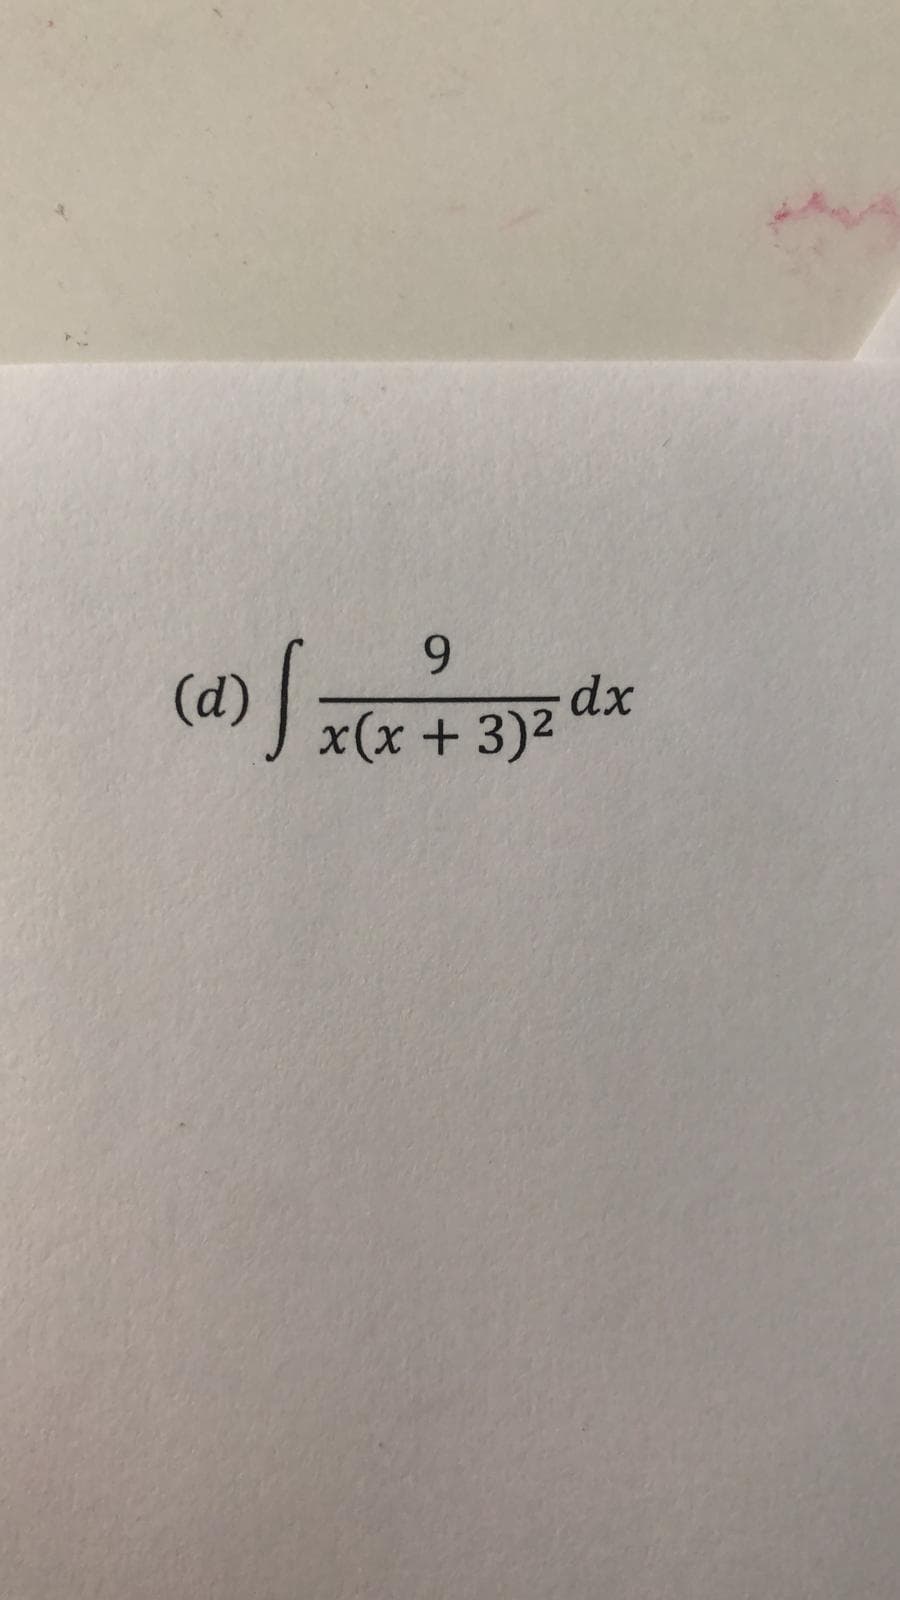 6.
(d))
dx
x(x + 3)2
